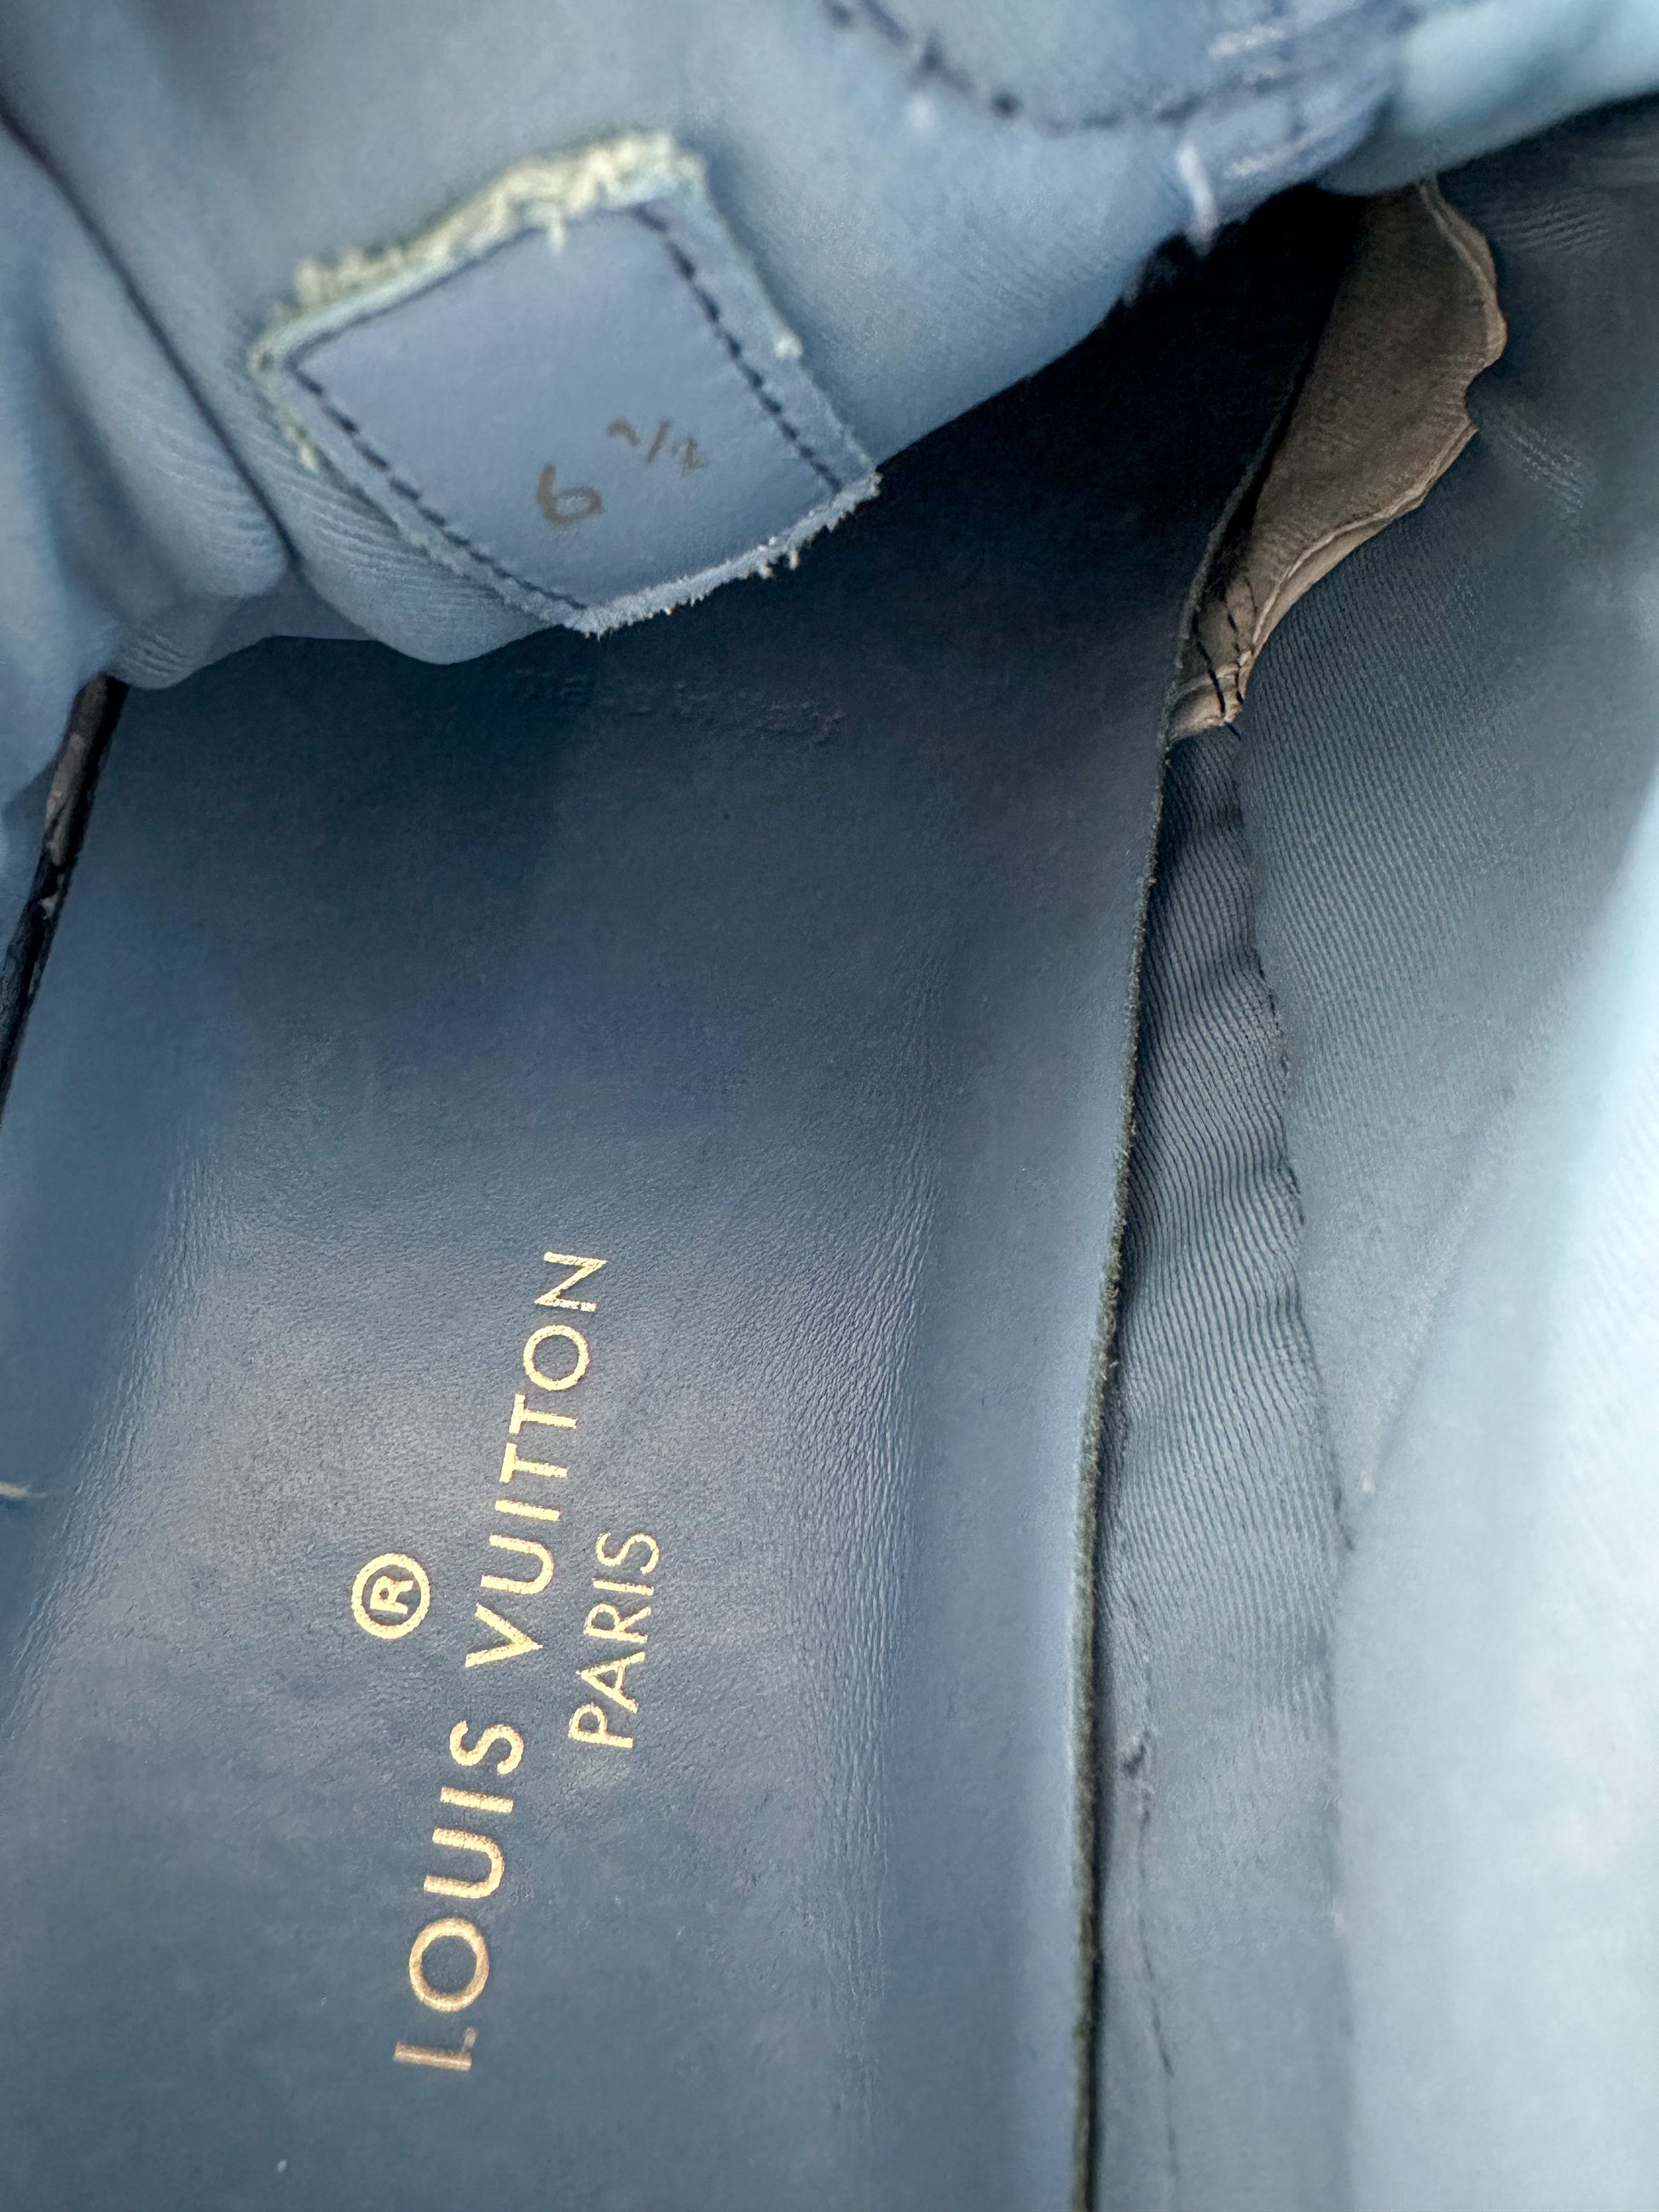 NWOB Authentic Louis Vuitton Fastlane Denim Monogram Sneakers Sz LV 5 EU 38  US 8